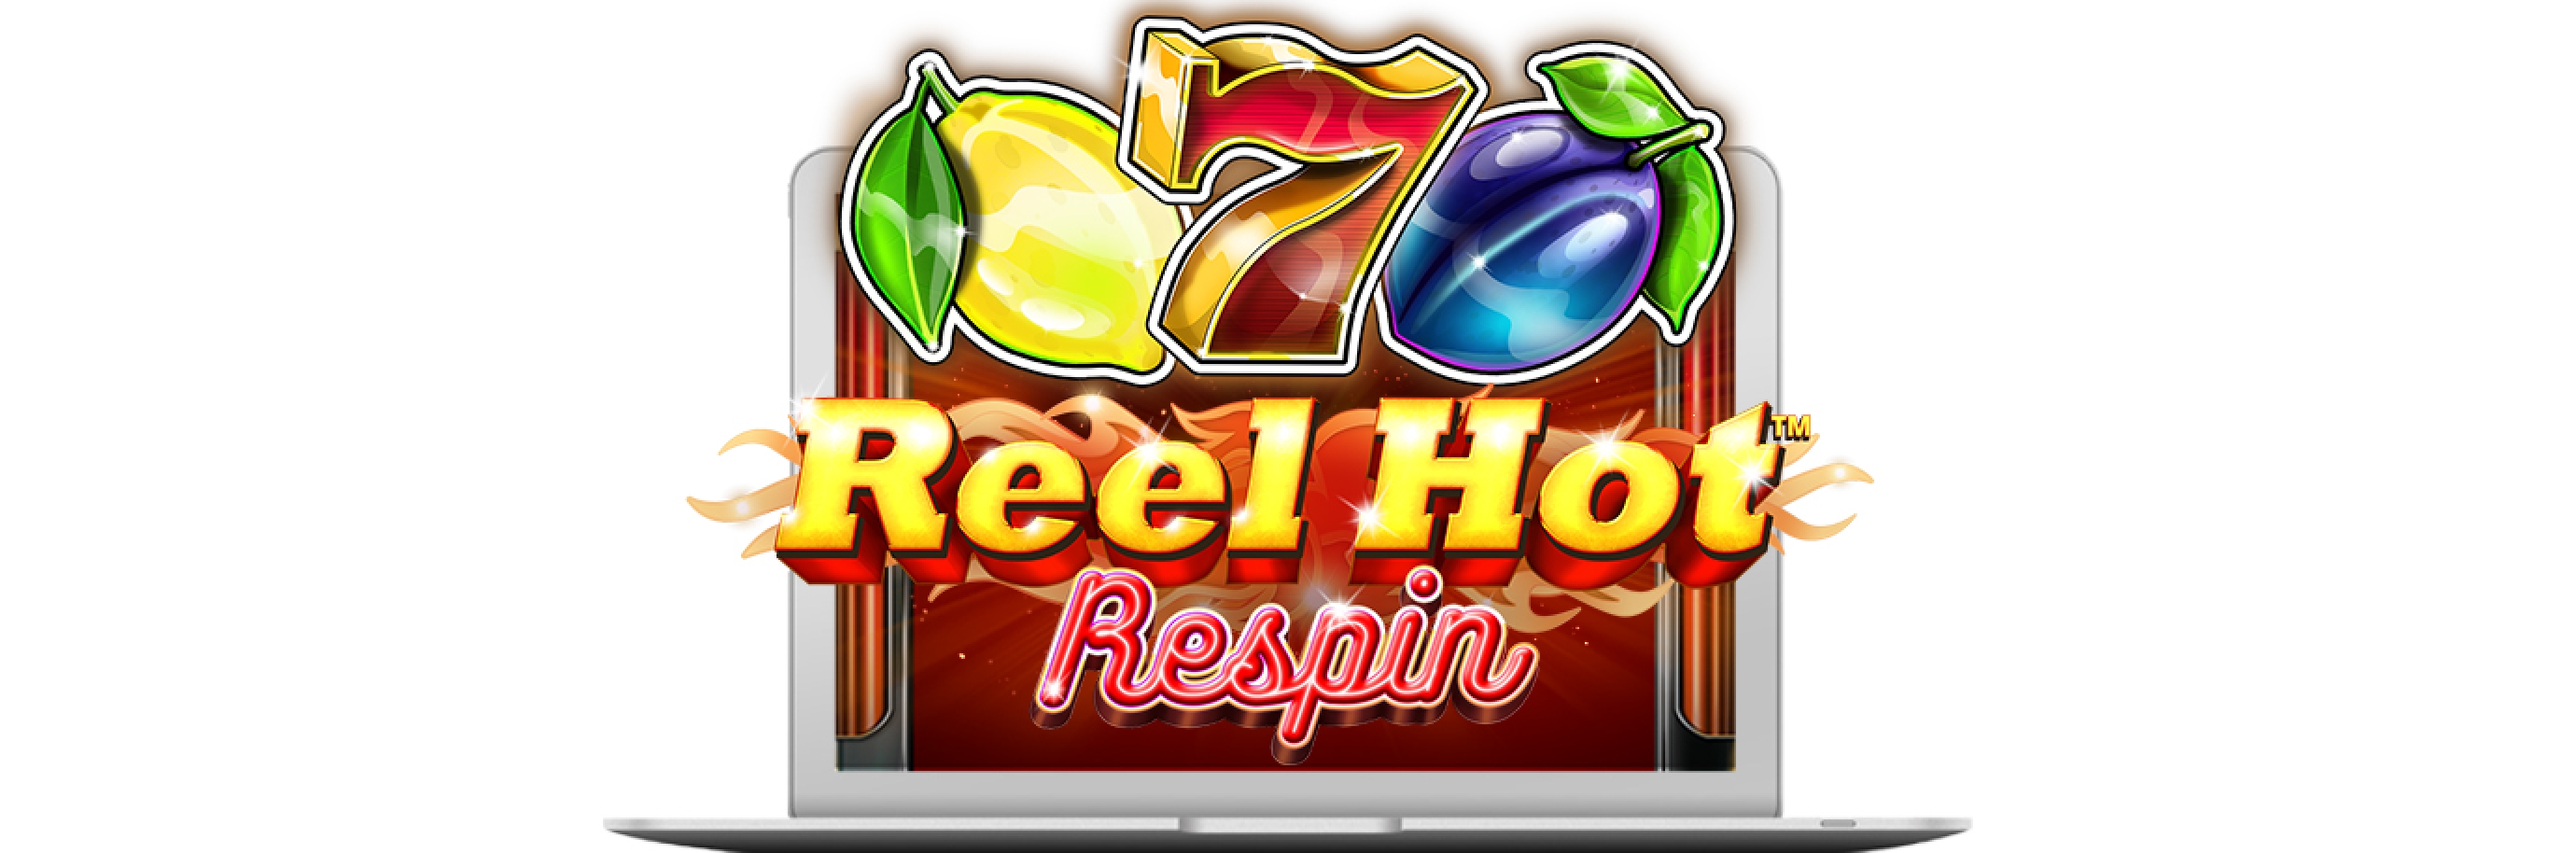 Reel Hot Respin demo